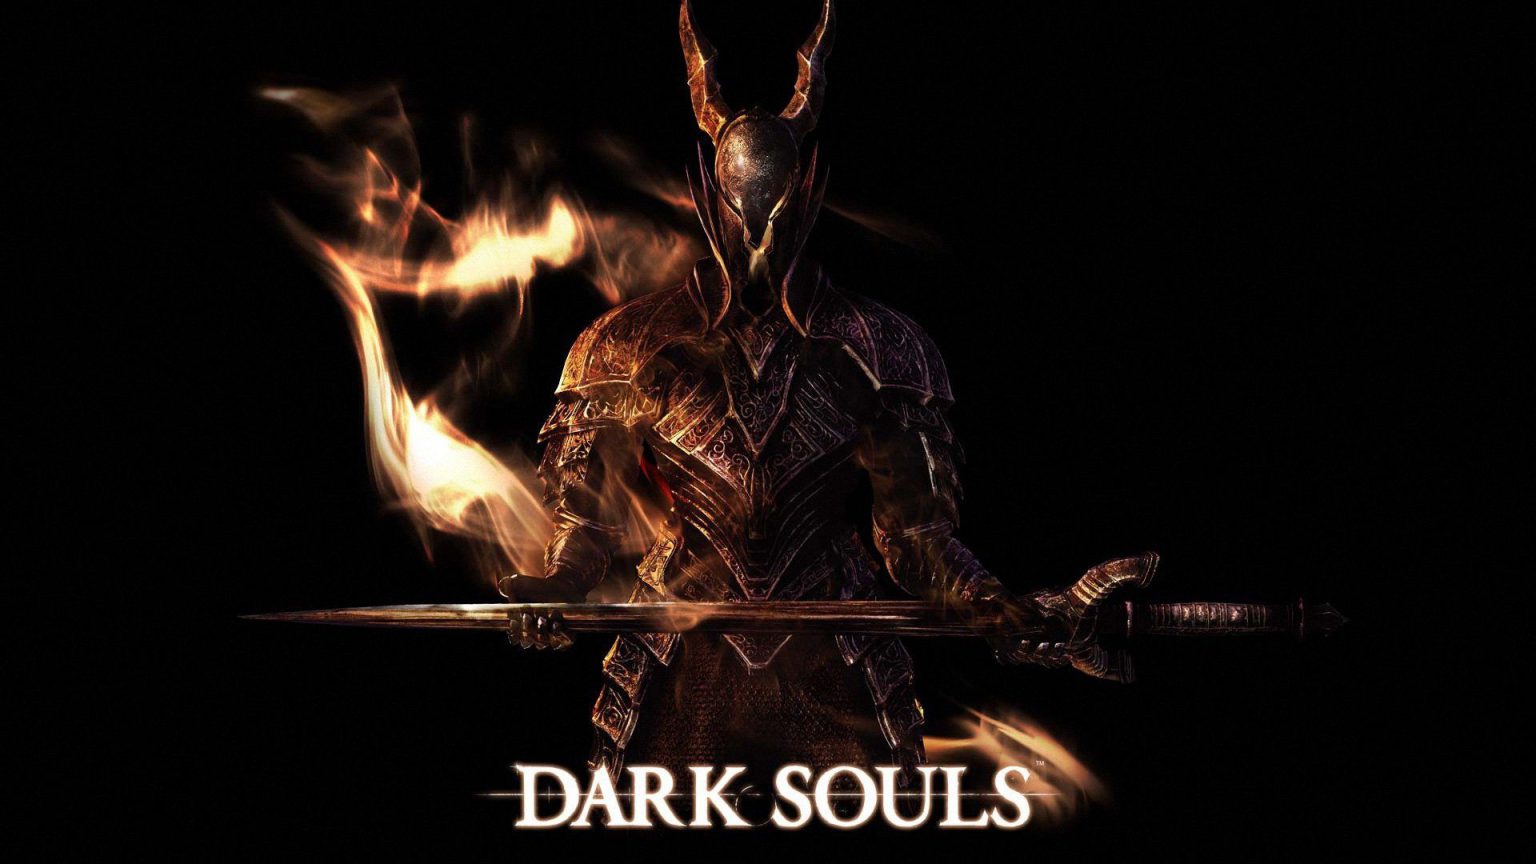 Dark Souls action rpg